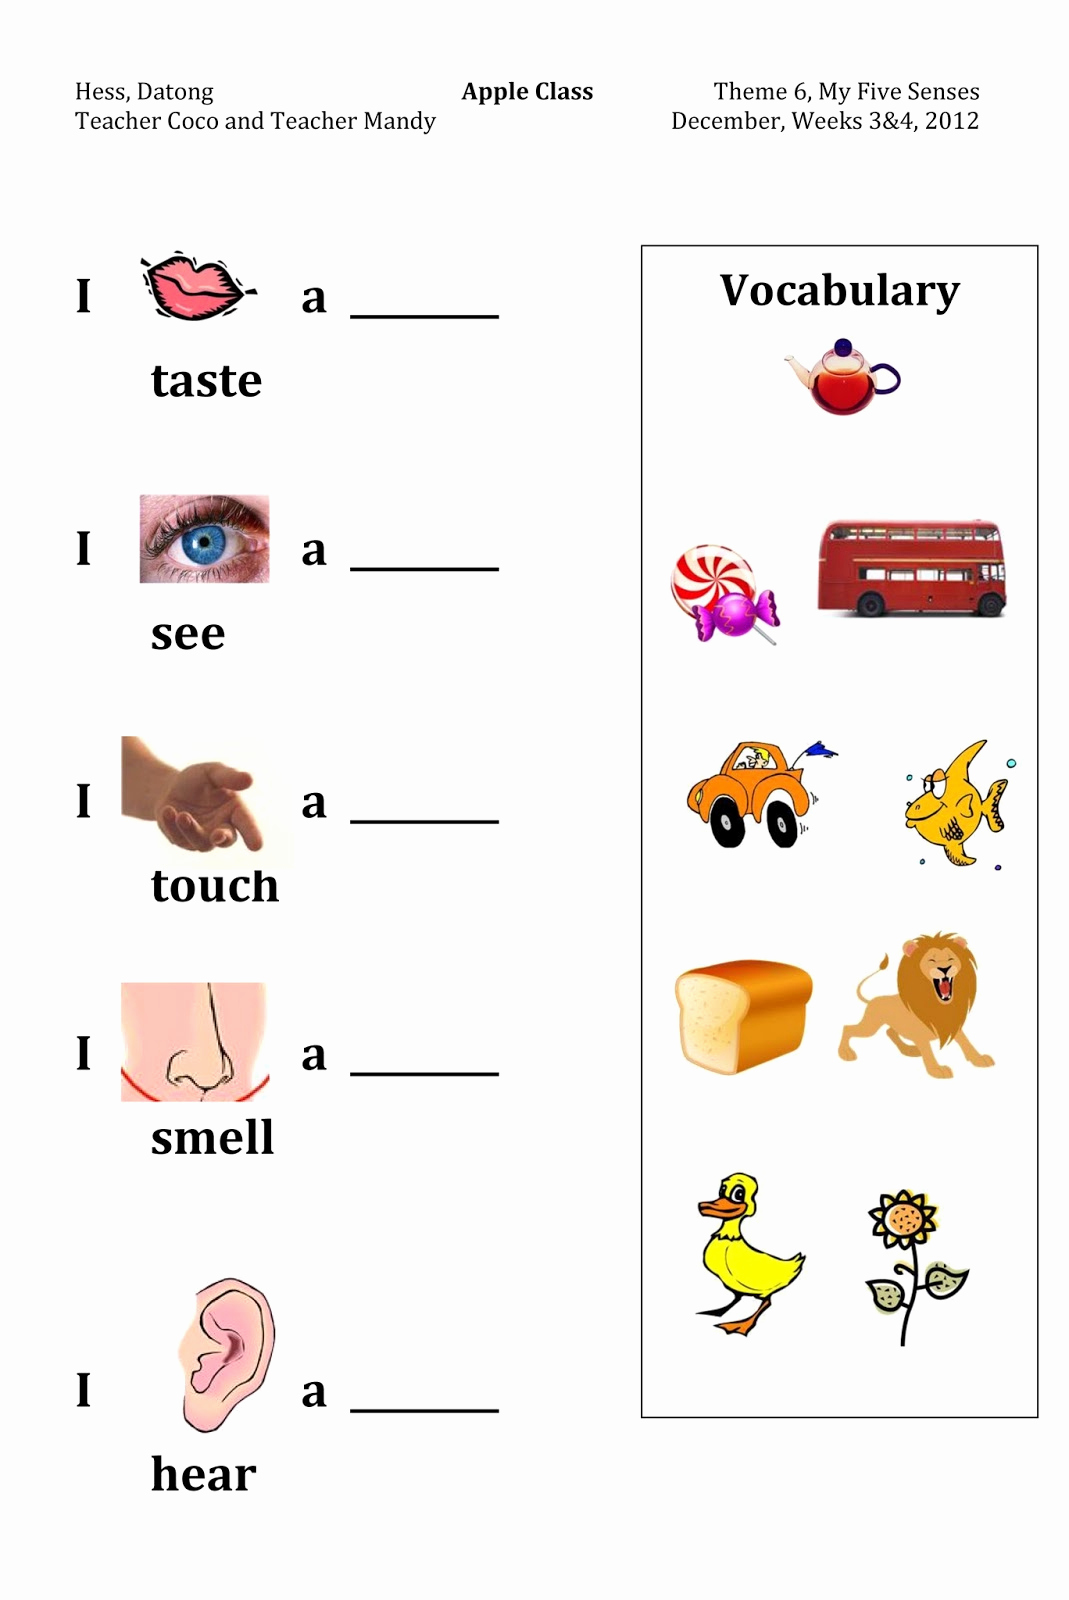 5 Senses Worksheets for Kindergarten Inspirational Hess American Preschool Apple Class Reading Poster My